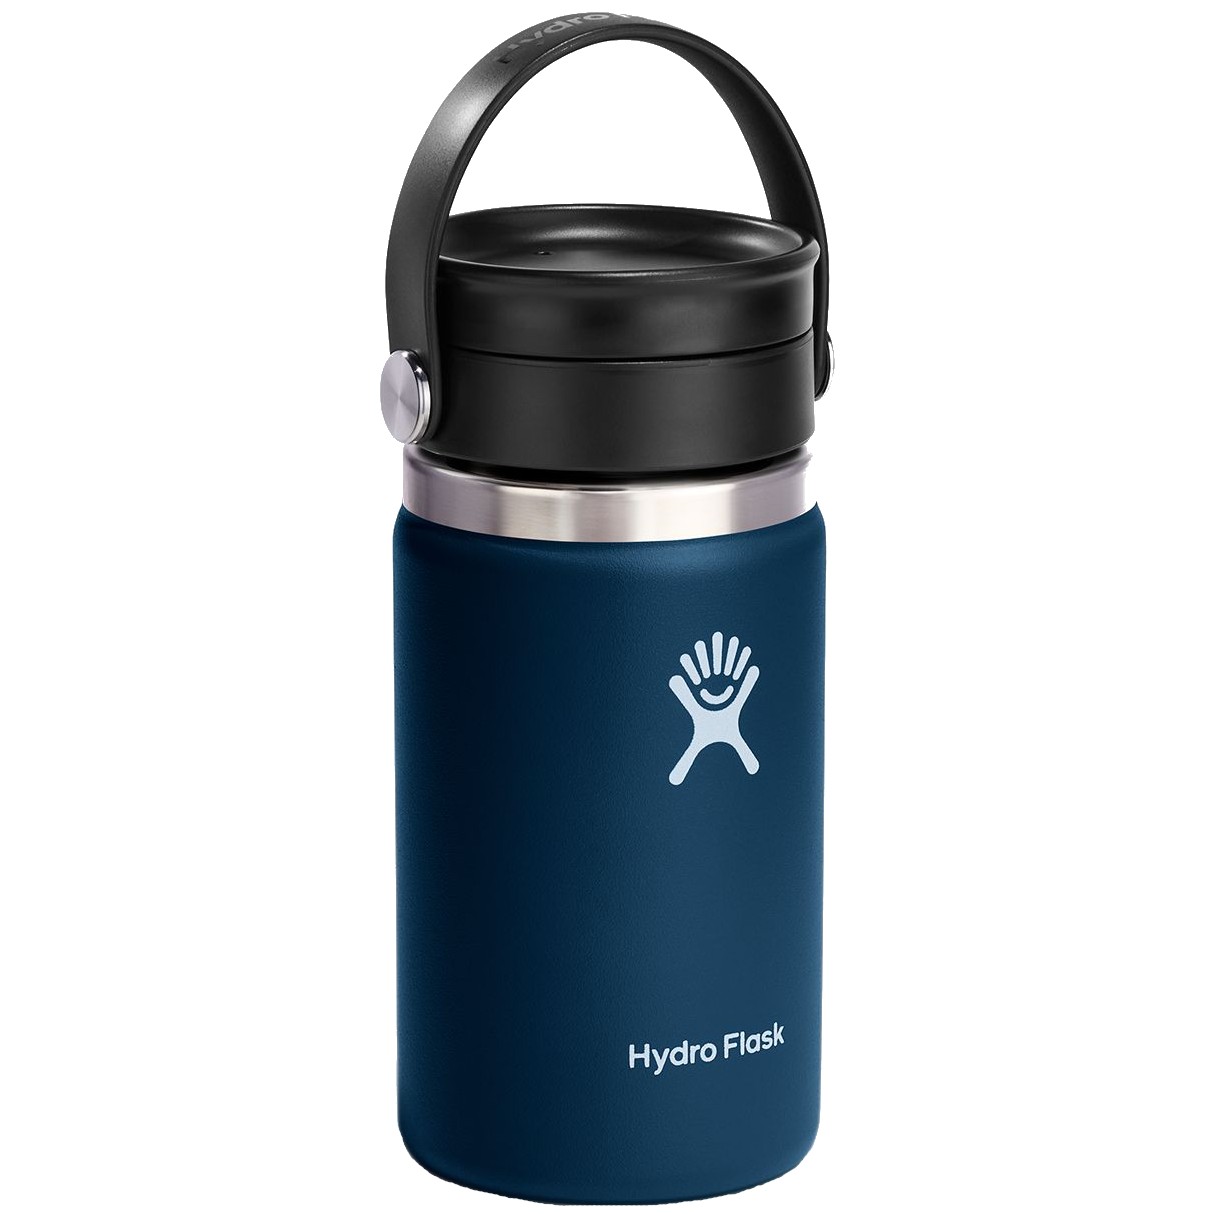 Hydro Flask 12oz Wide Mouth Flex Sip Lid Coffee Flask